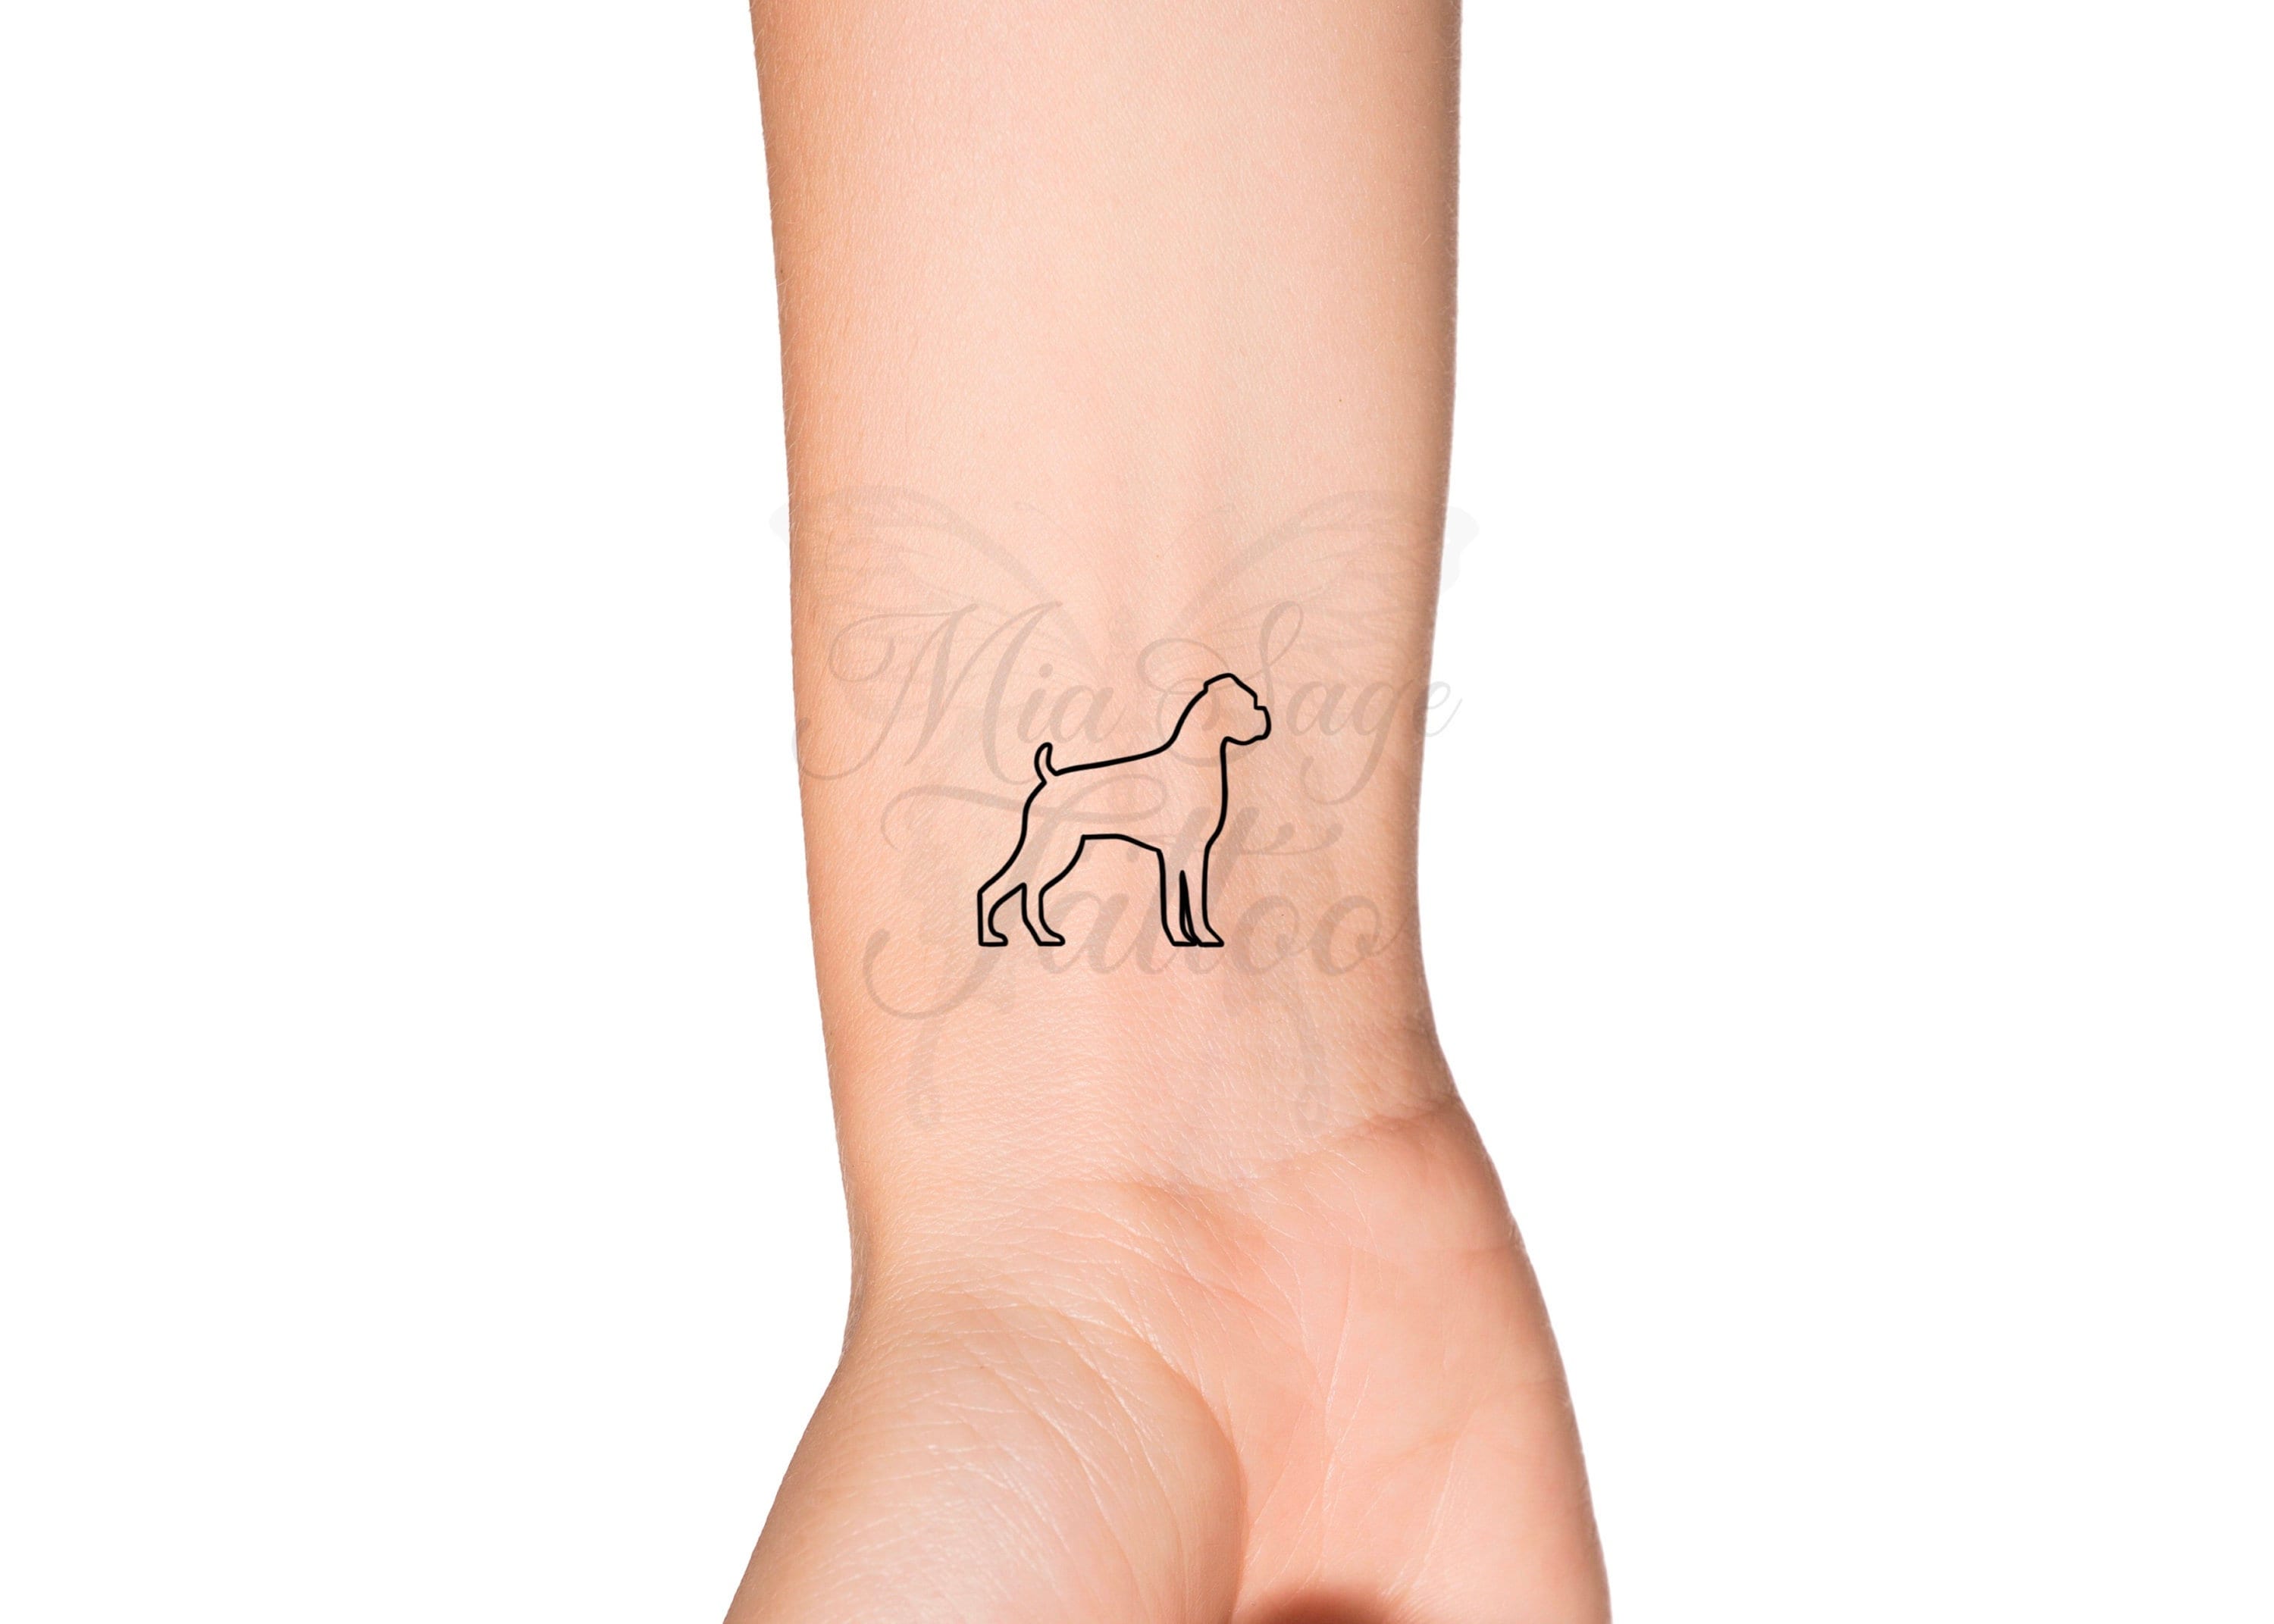 Puppy tattoo by himeLILt on DeviantArt